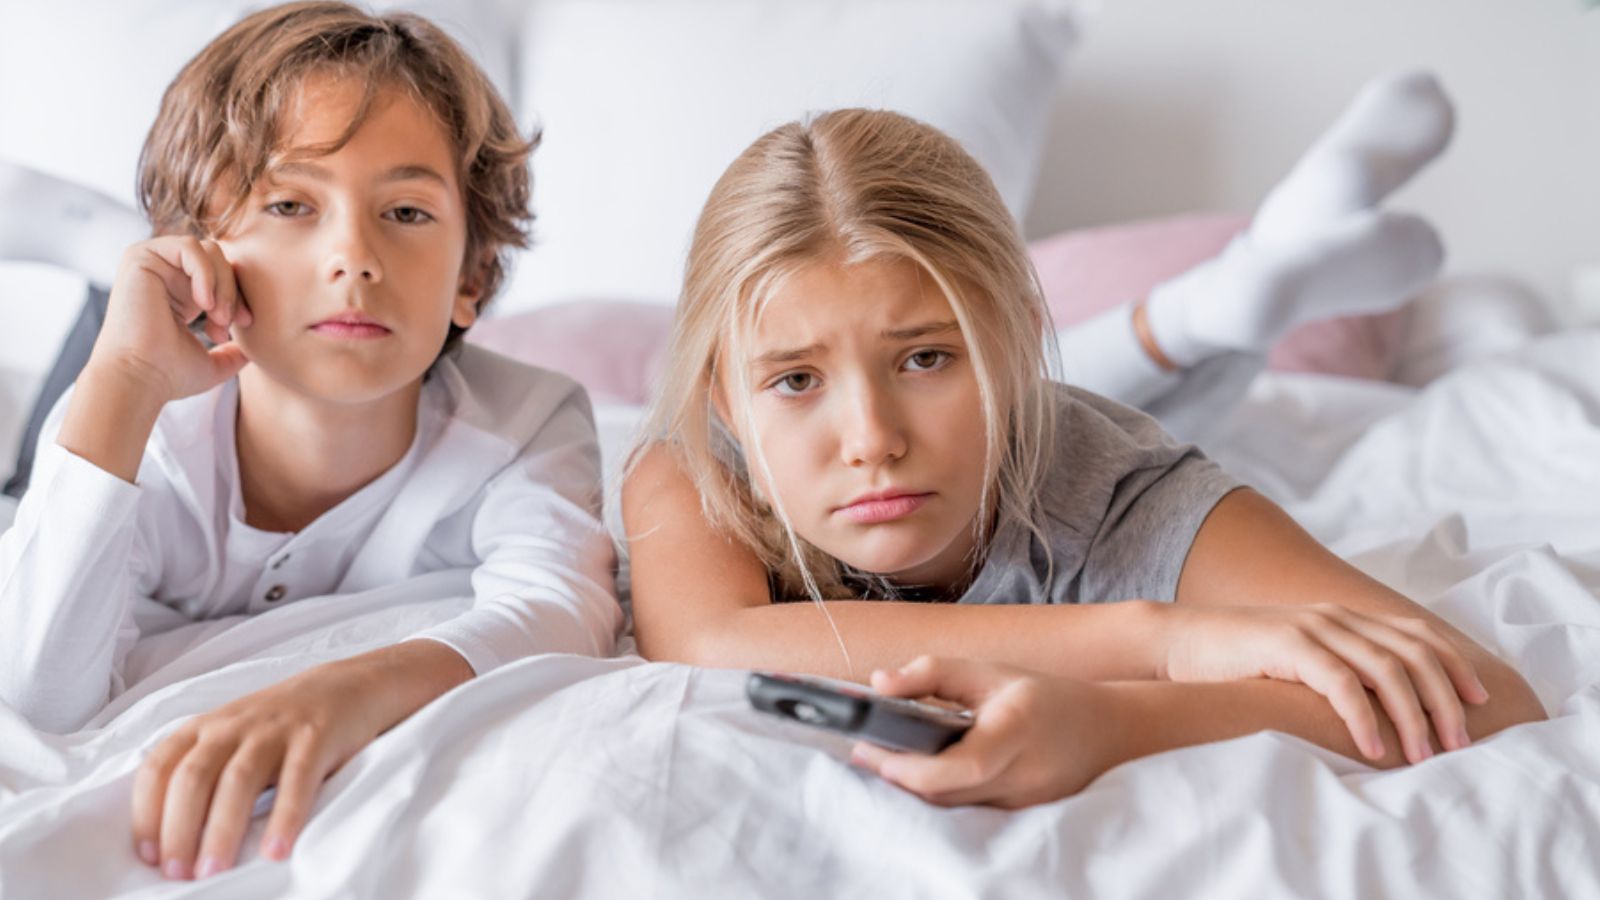 Boring boy and girl in pajamas lying in bedroom at home watching tv.jpg